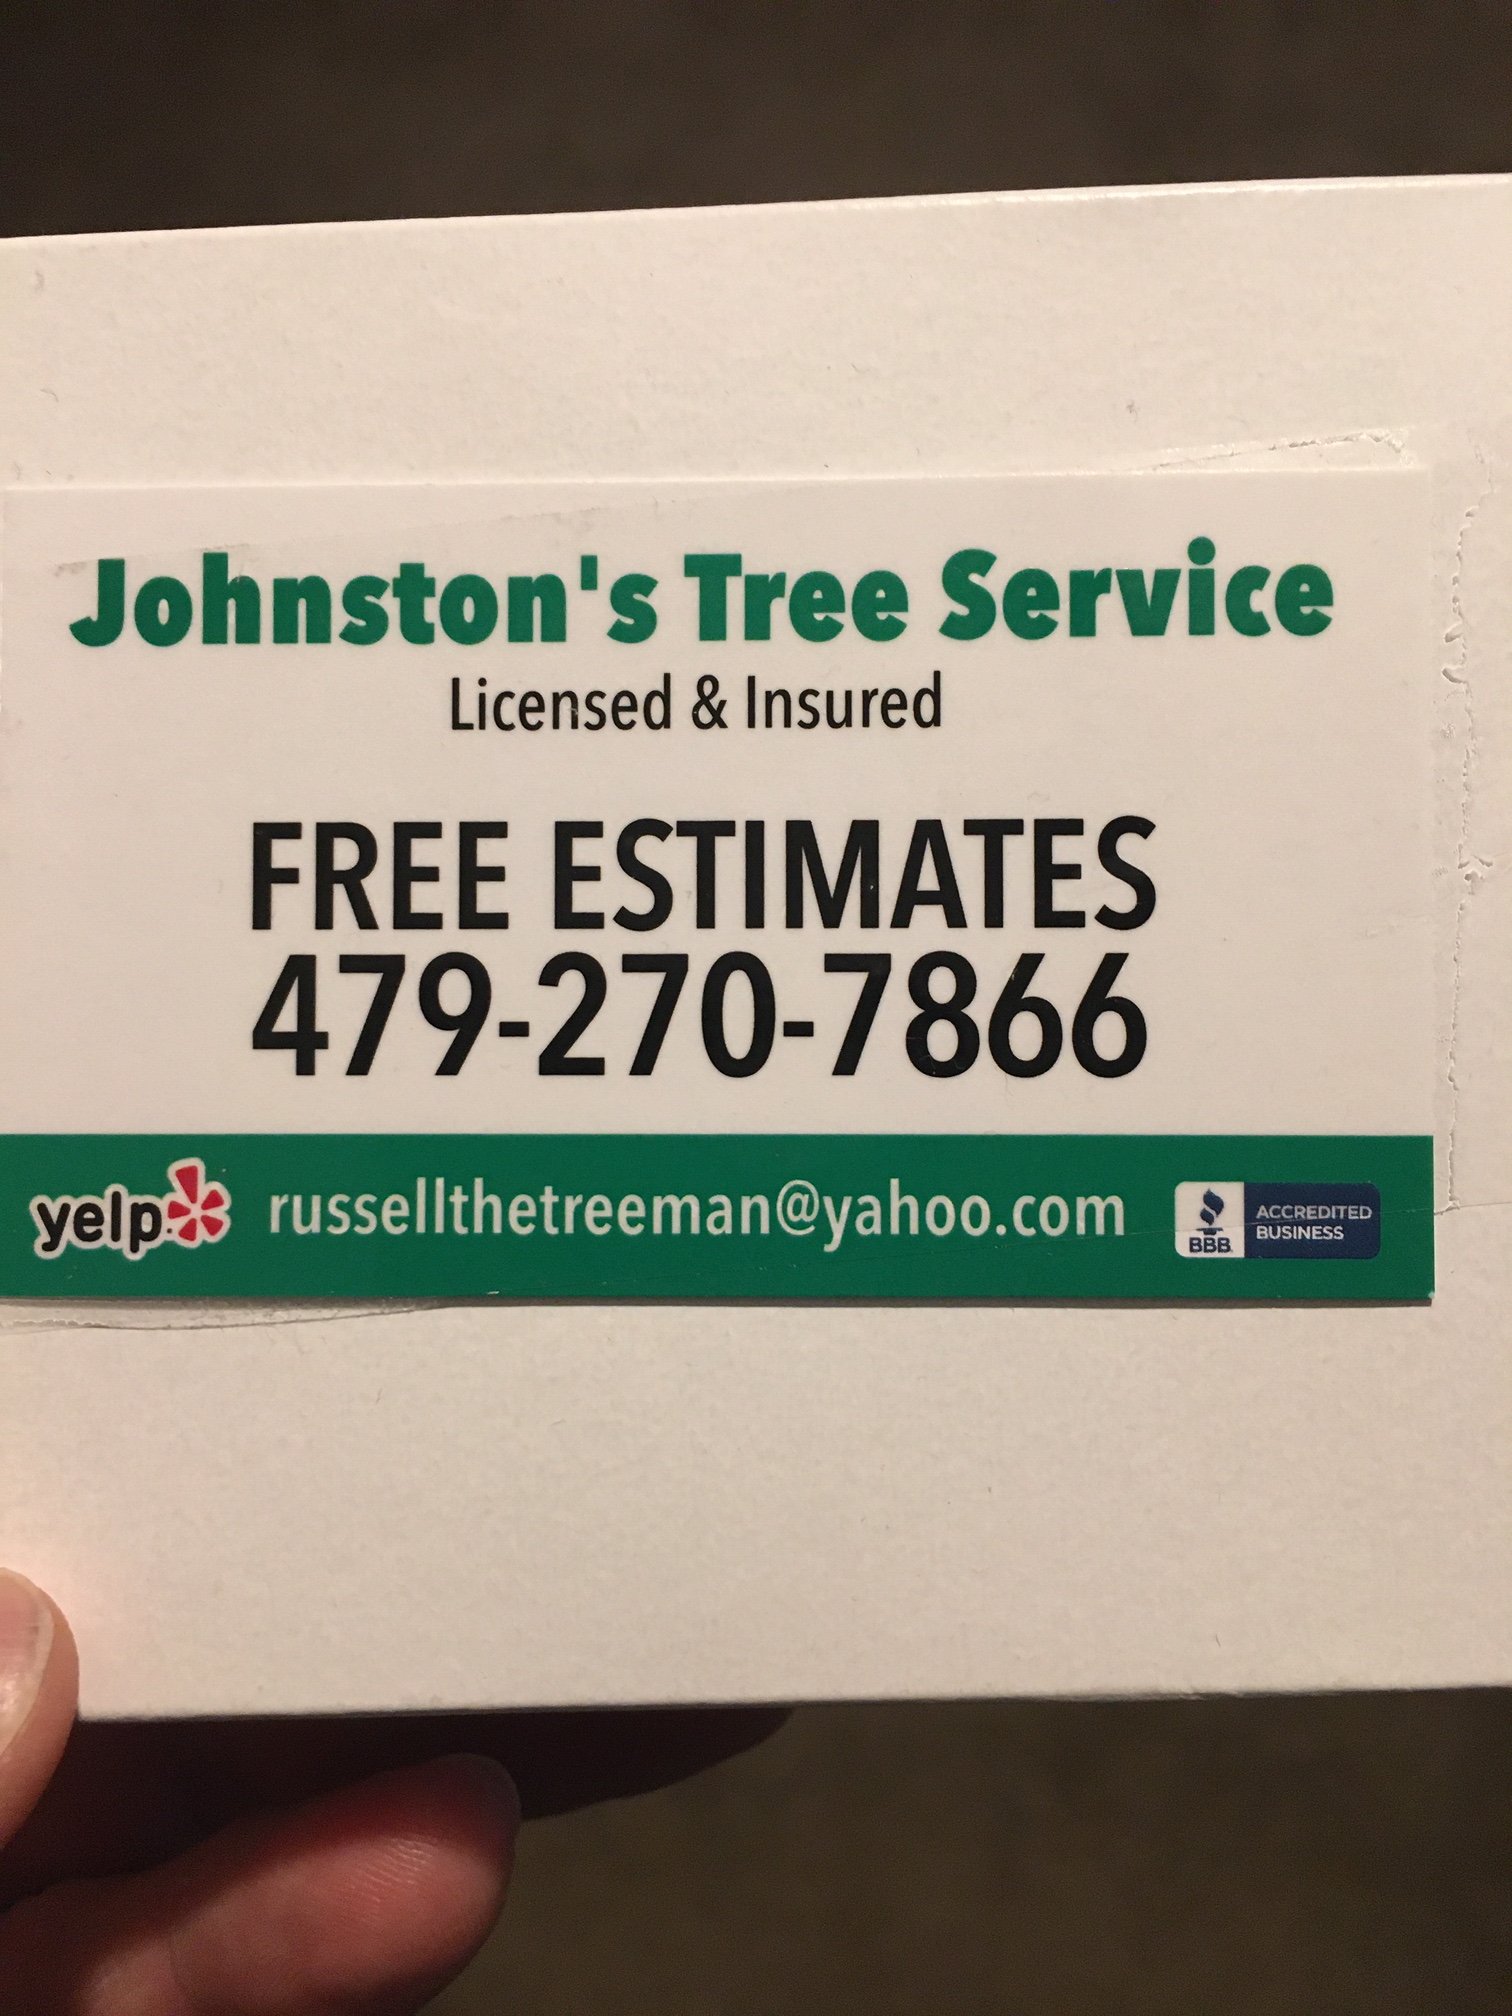 Johnston's Tree Service Logo